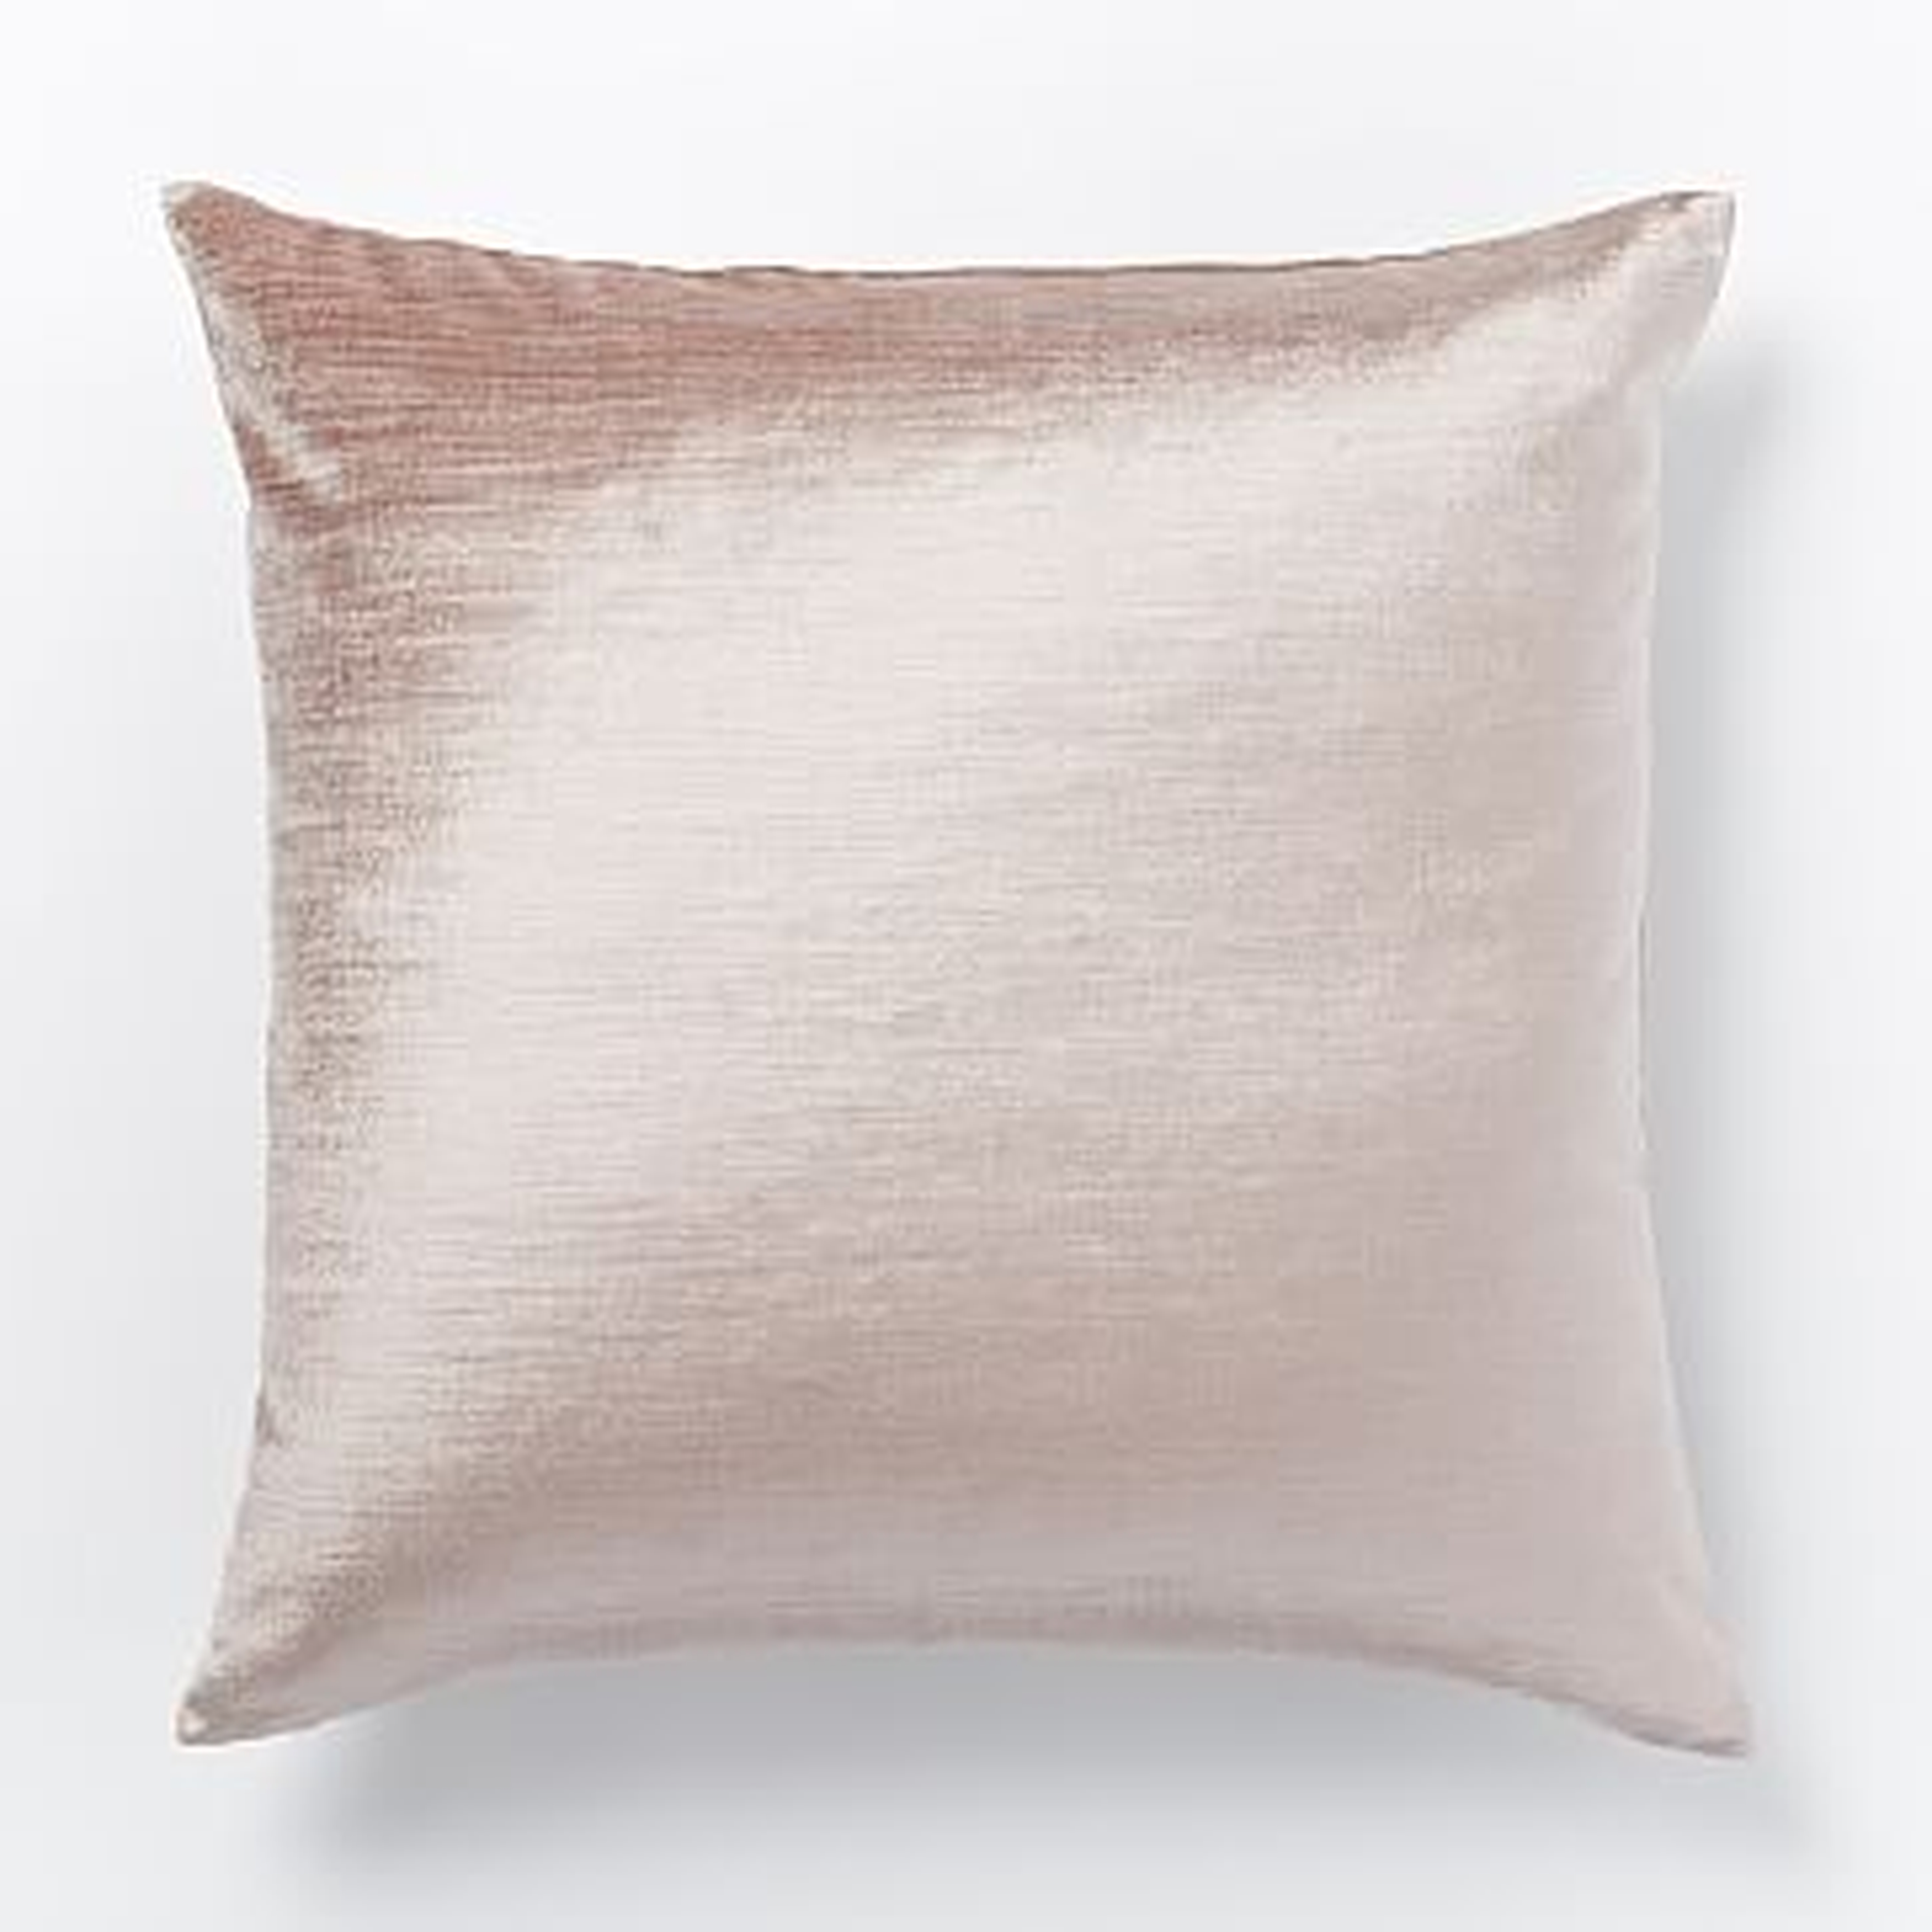 Cotton Luster Velvet Pillow Cover, 20"x20", Dusty Blush - West Elm